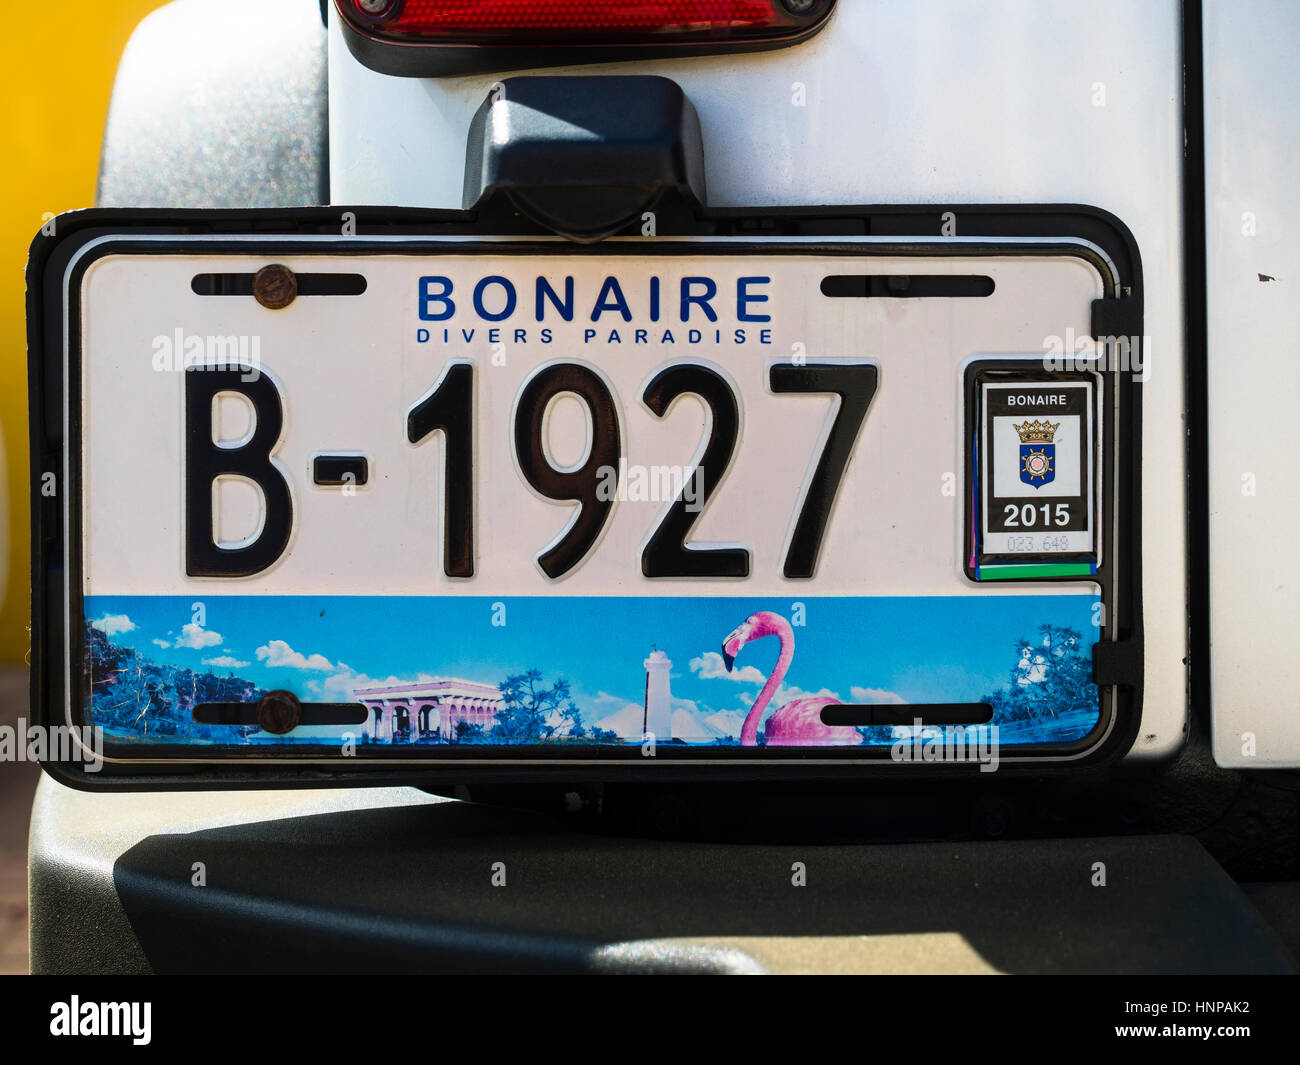 La targa di un automobile, Kralendijk Bonaire Island, Bonaire, Antille olandesi Foto Stock